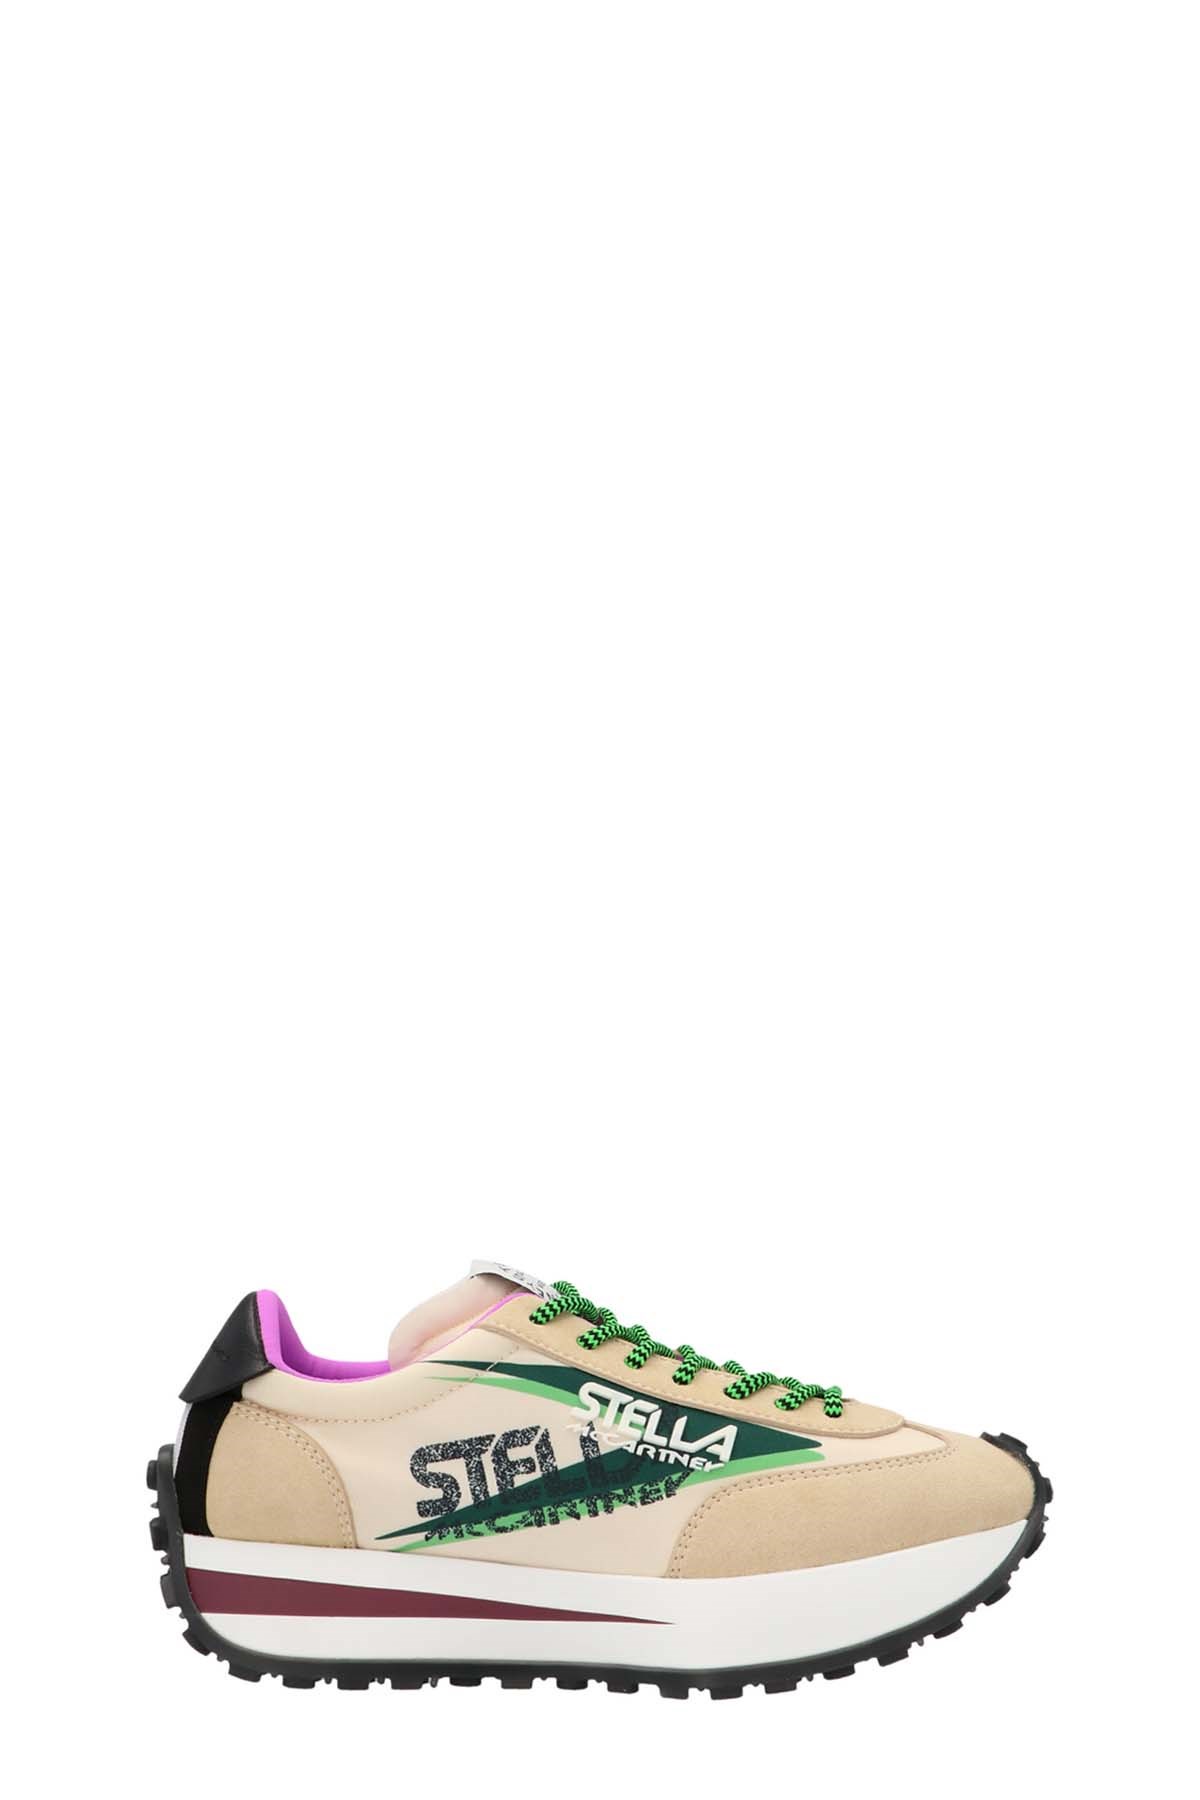 STELLA MCCARTNEY 'New’ Sneakers